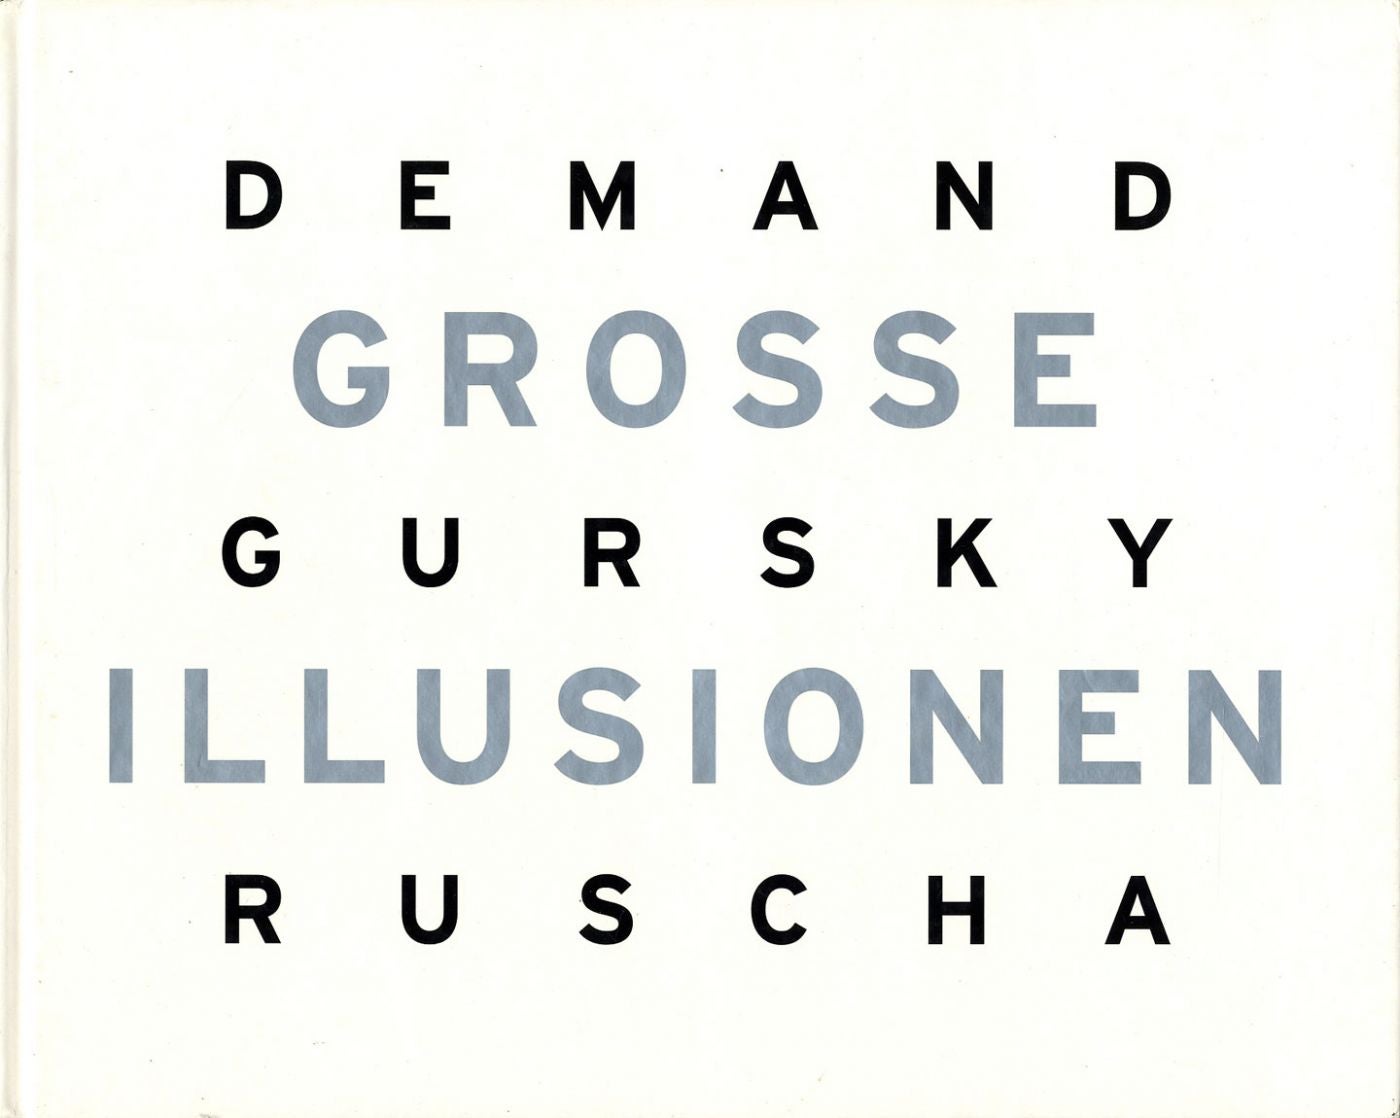 Grosse Illusionen: Thomas Demand, Andreas Gursky, Ed Ruscha (German Edition)